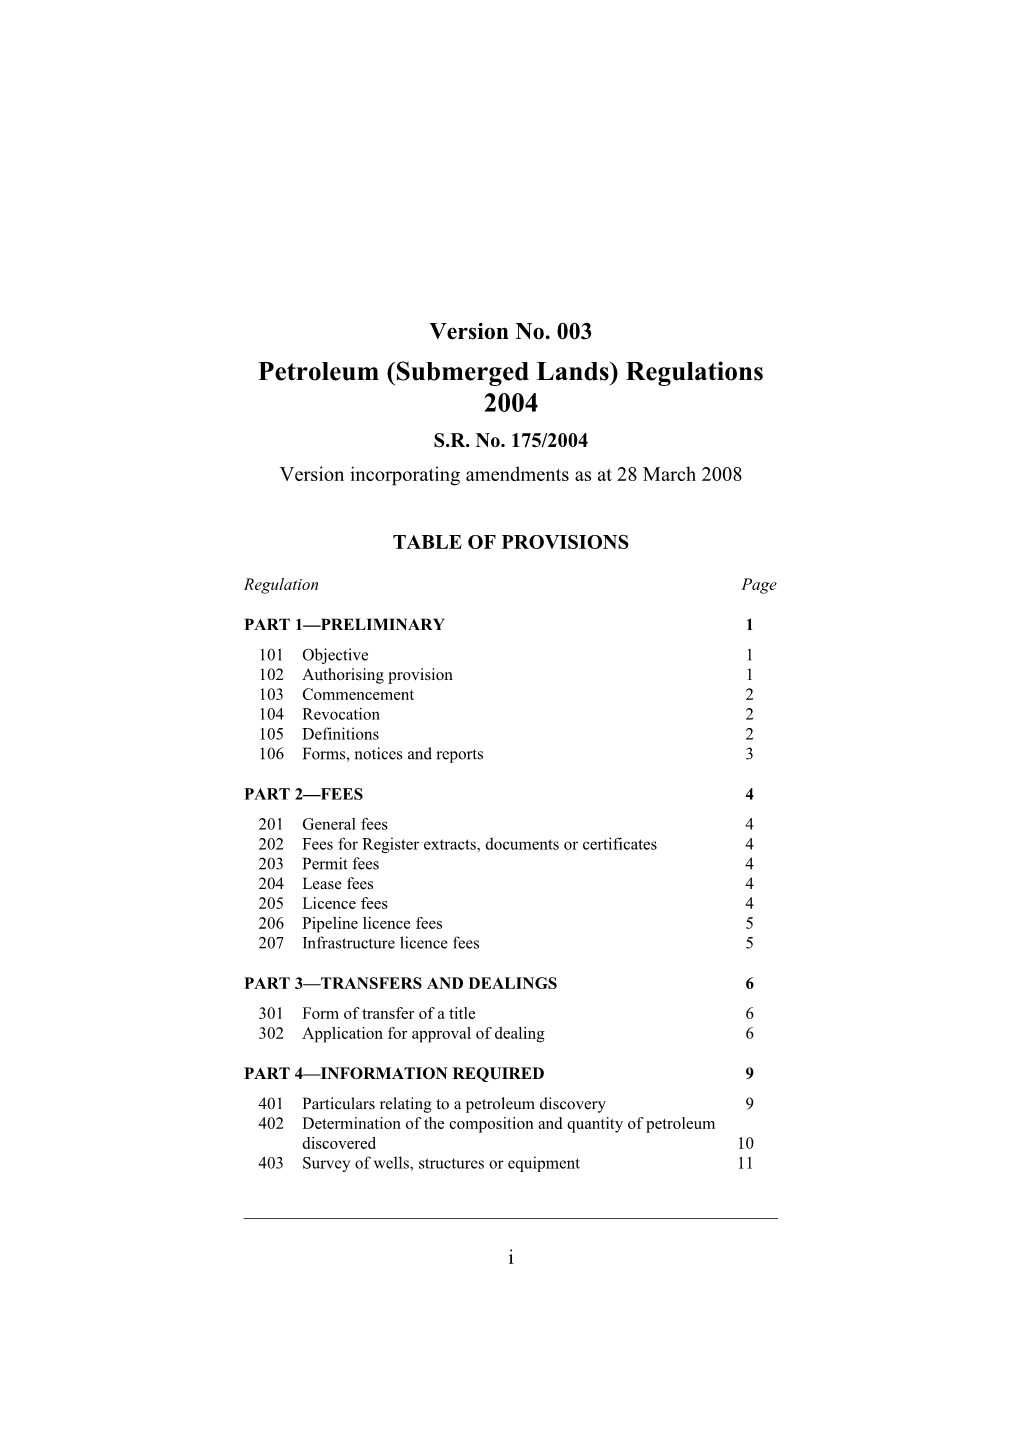 Petroleum (Submerged Lands) Regulations 2004